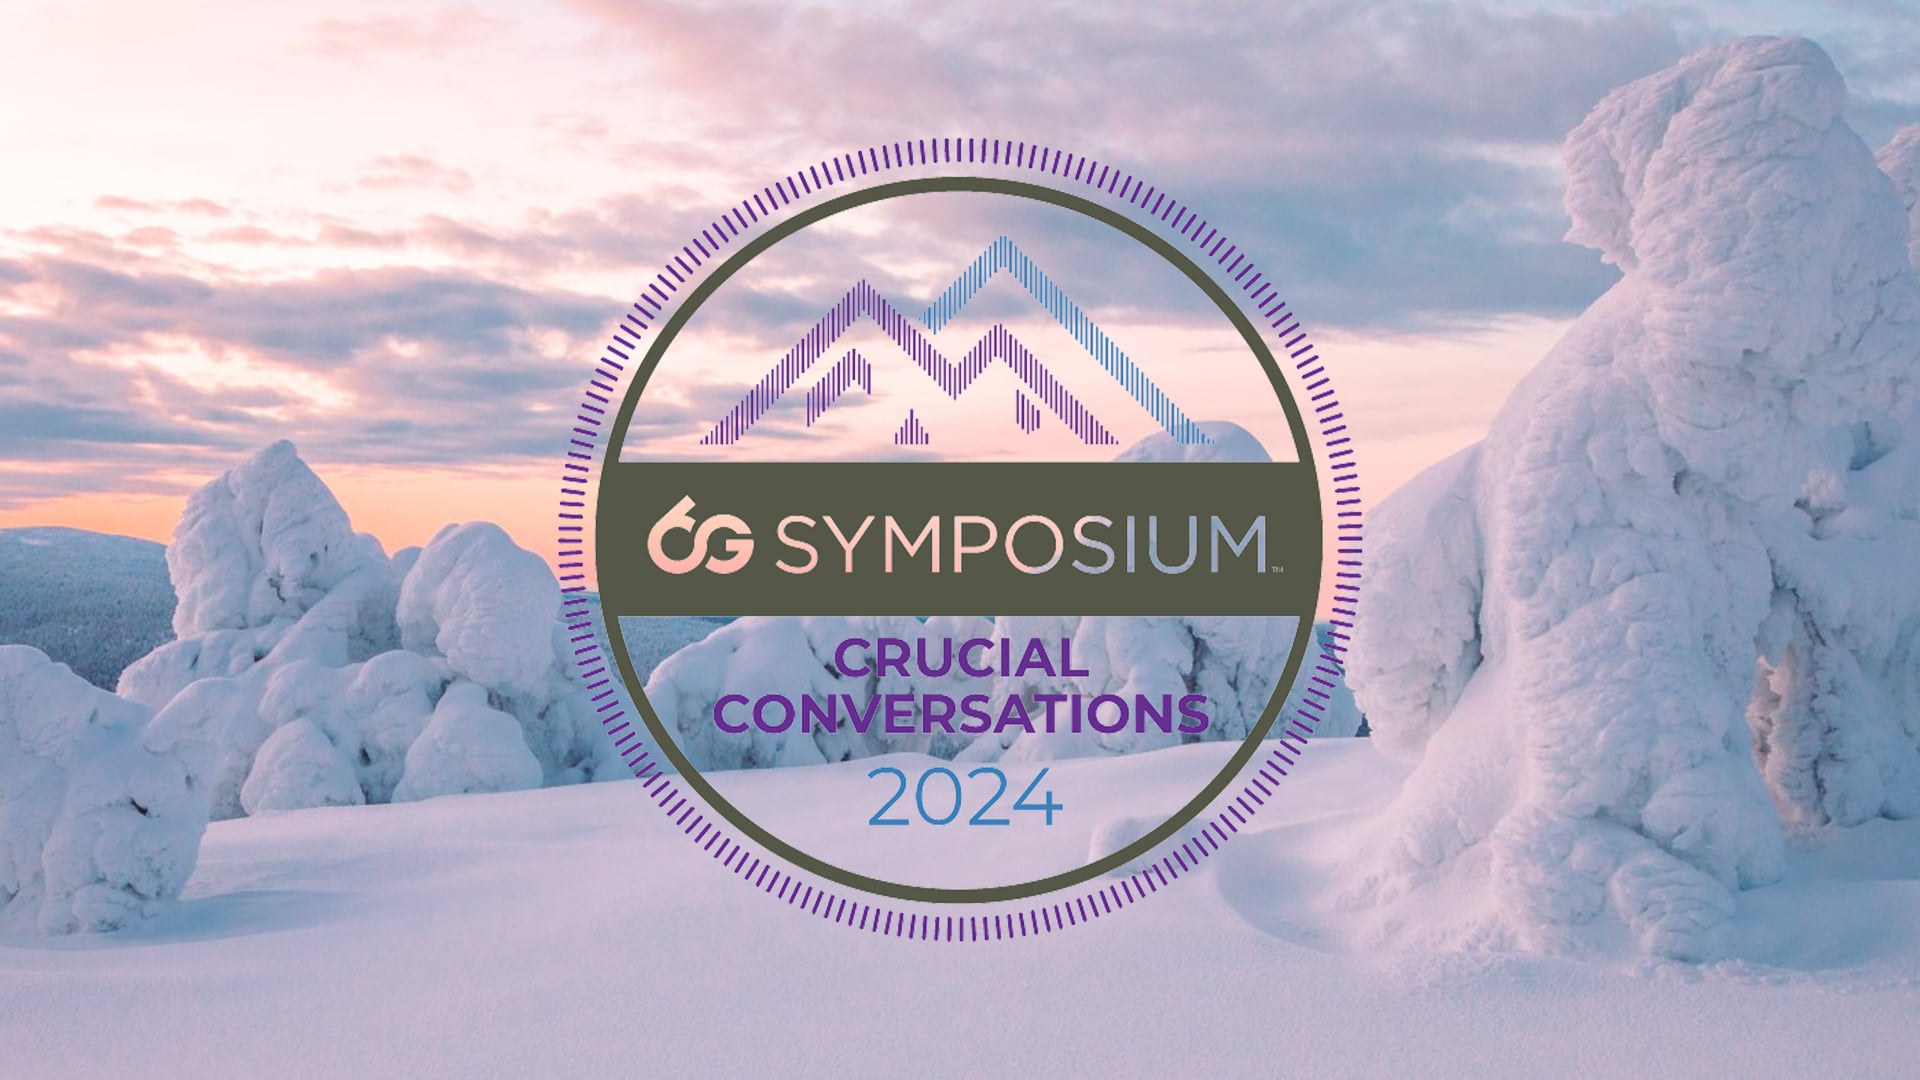 6G Symposium 2024 logo